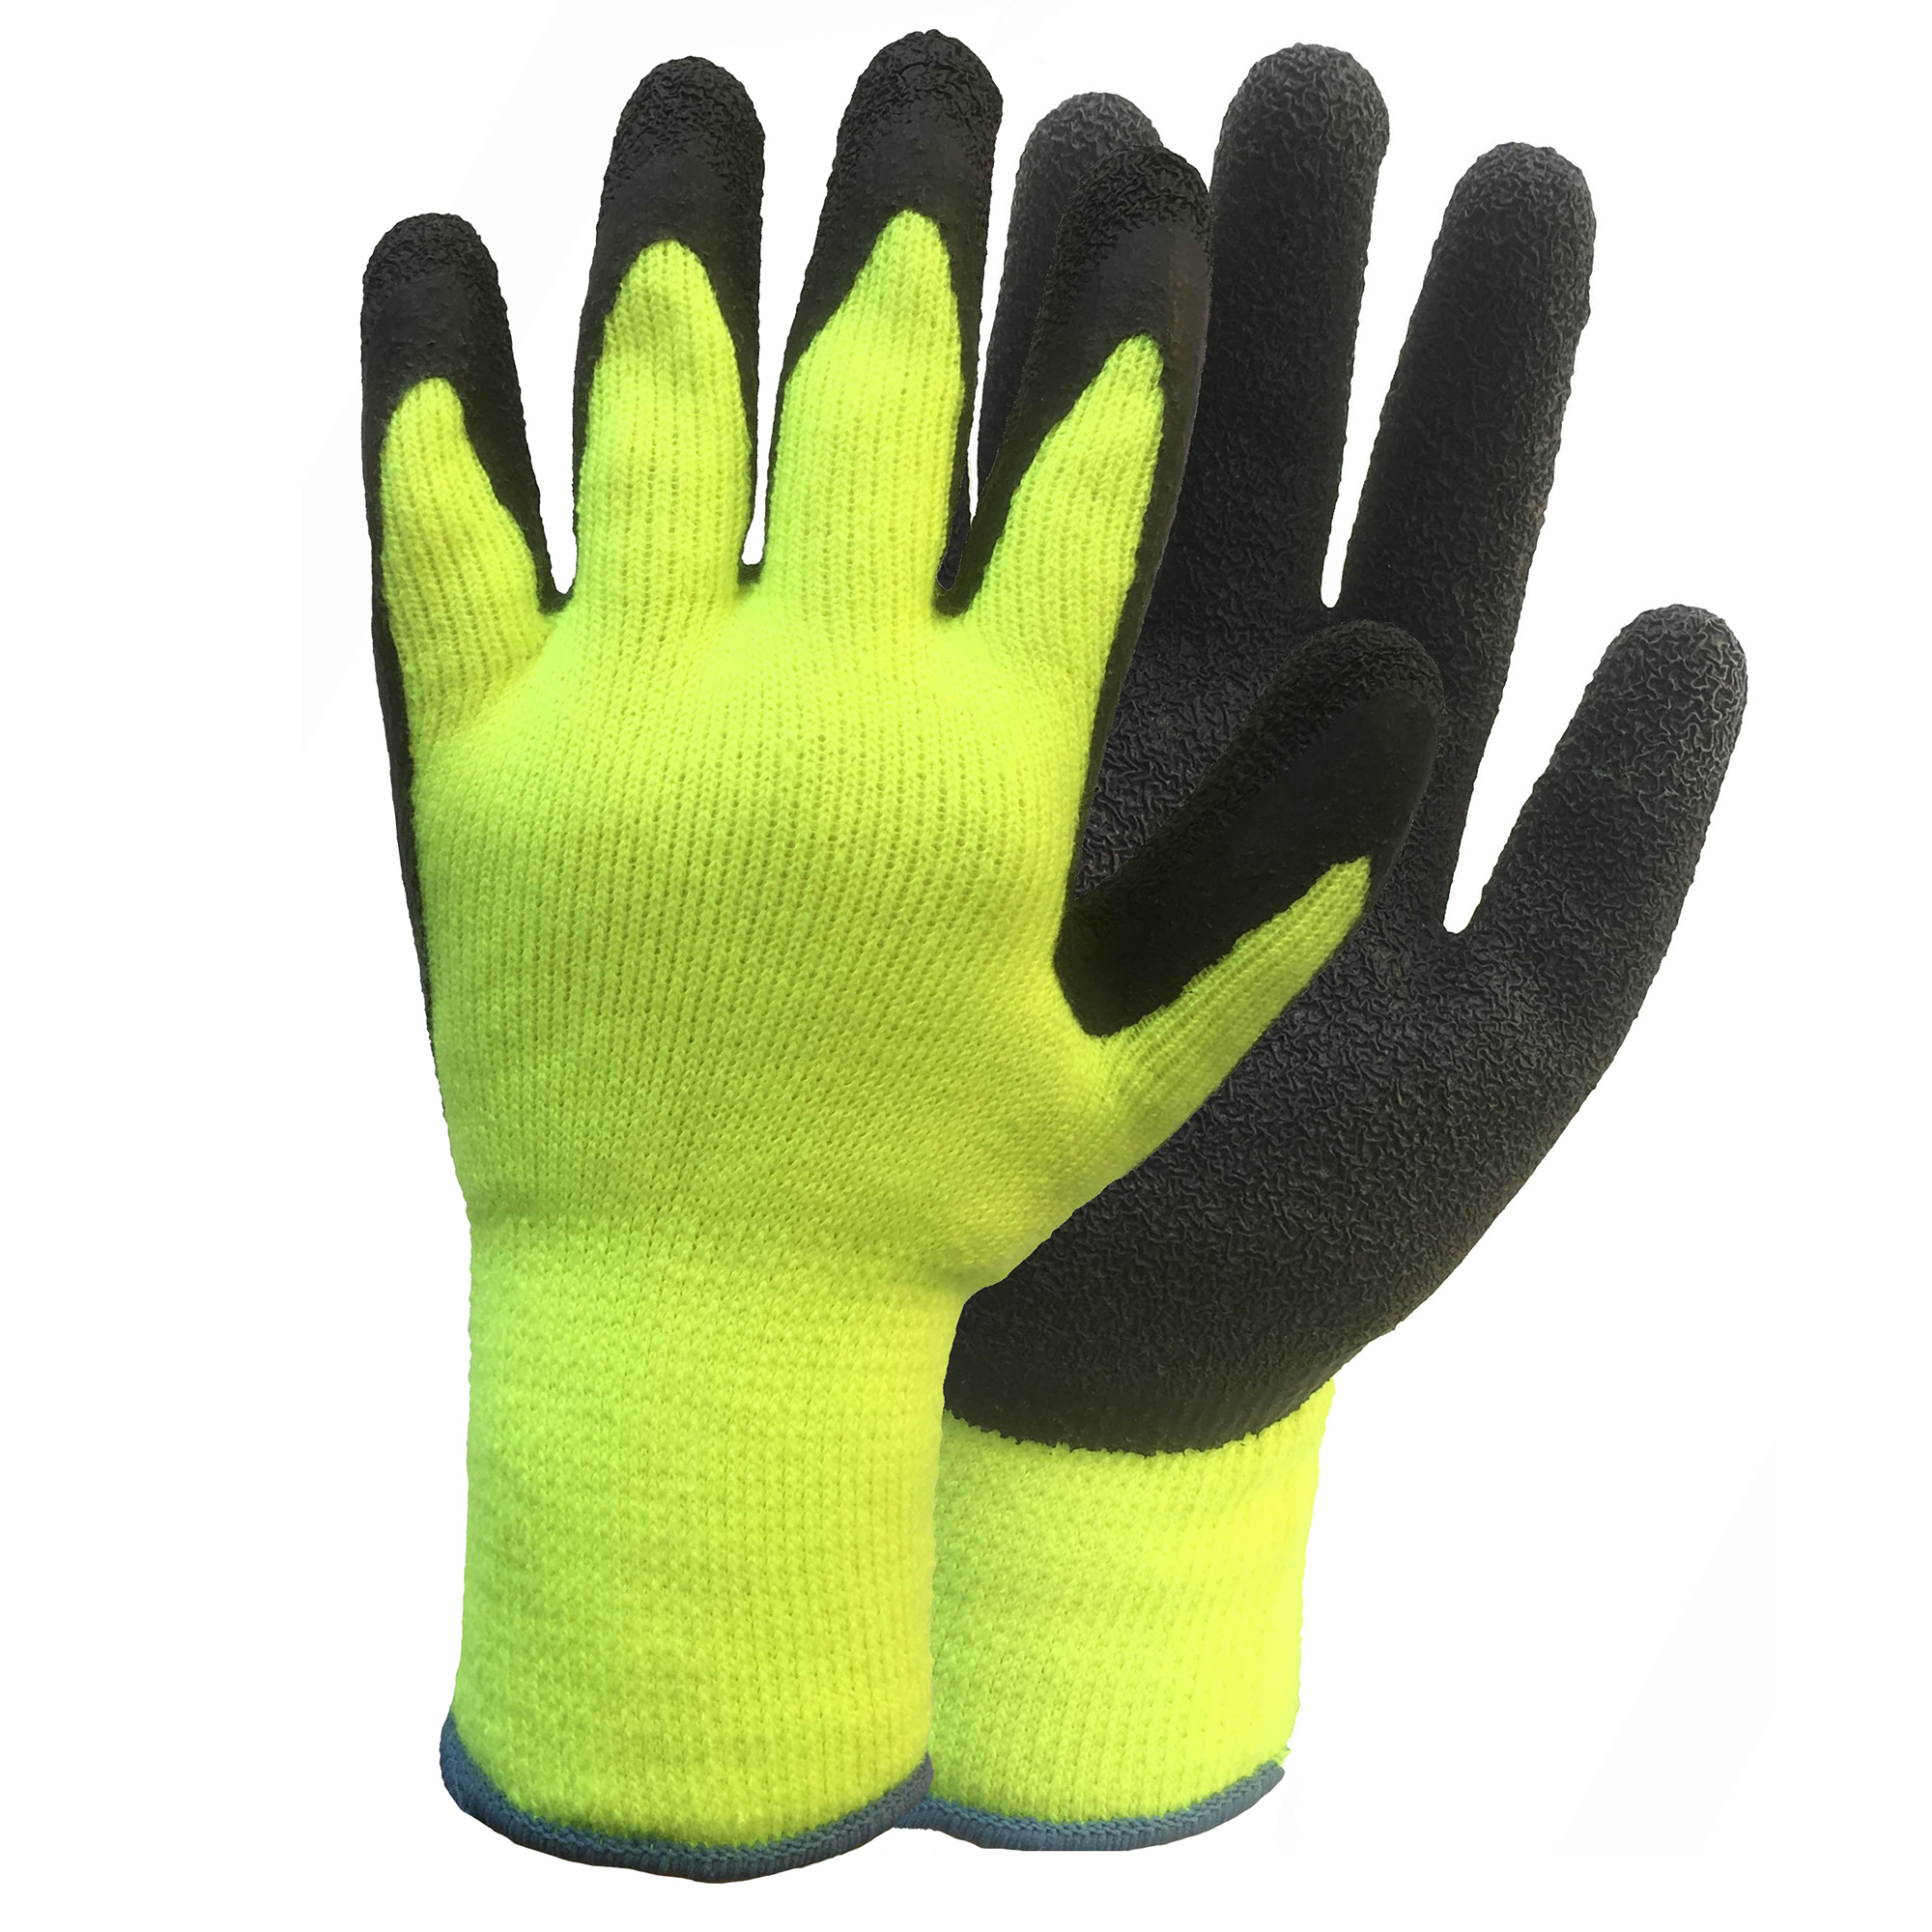 Hi-Viz Rubber Coated Palm Gloves, 1 Pair